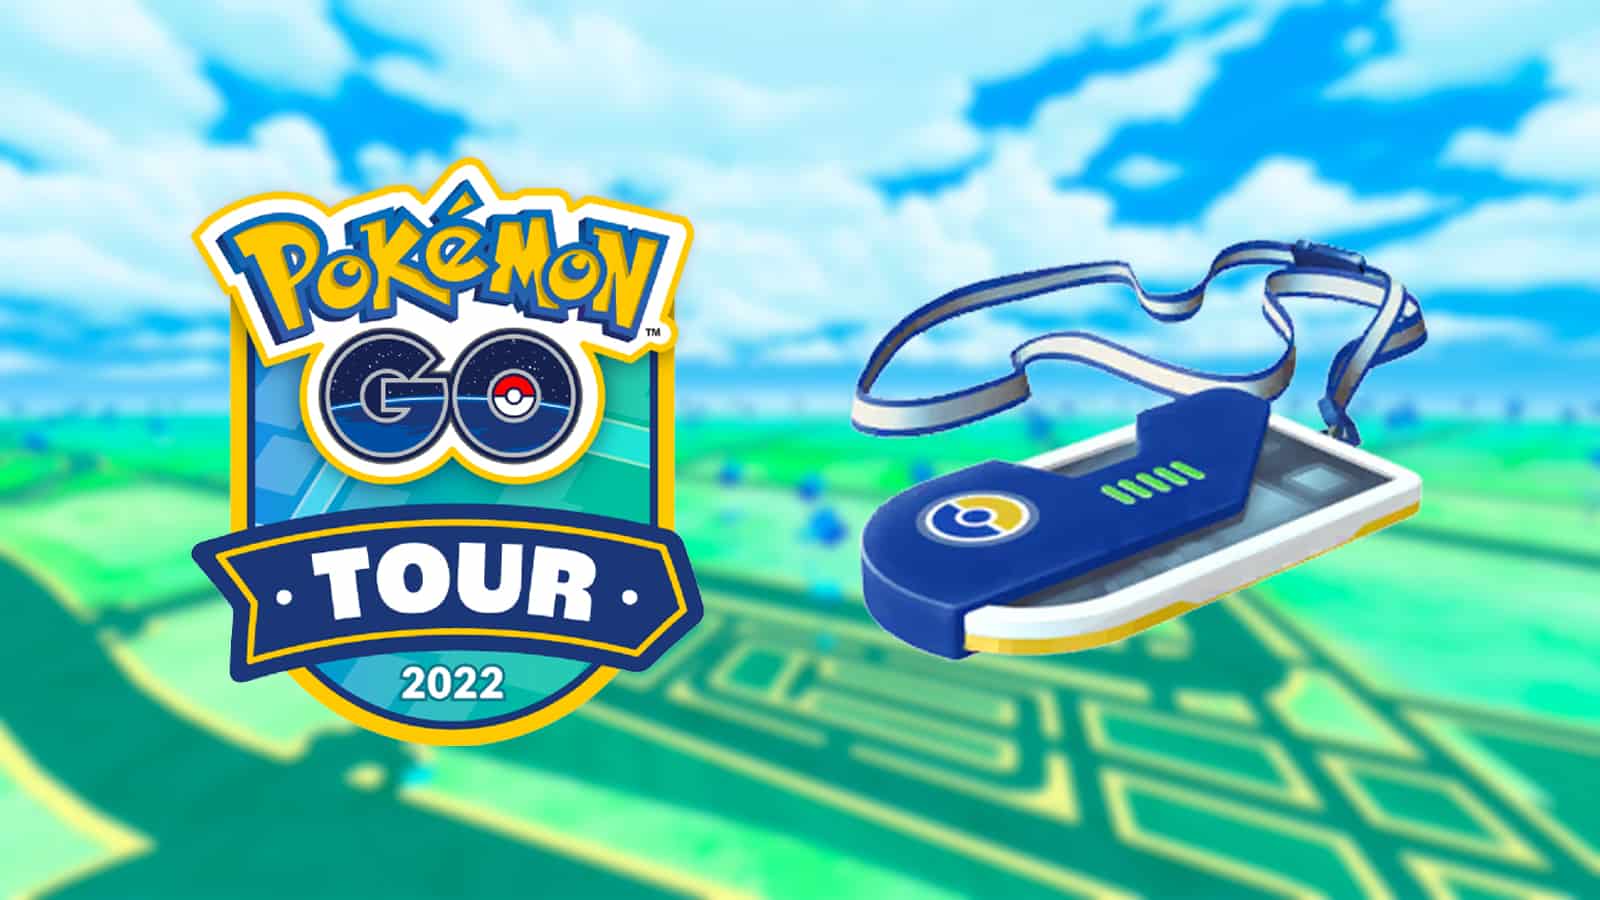 The logo for Pokemon Go Johto Tour next to a ticket for the event